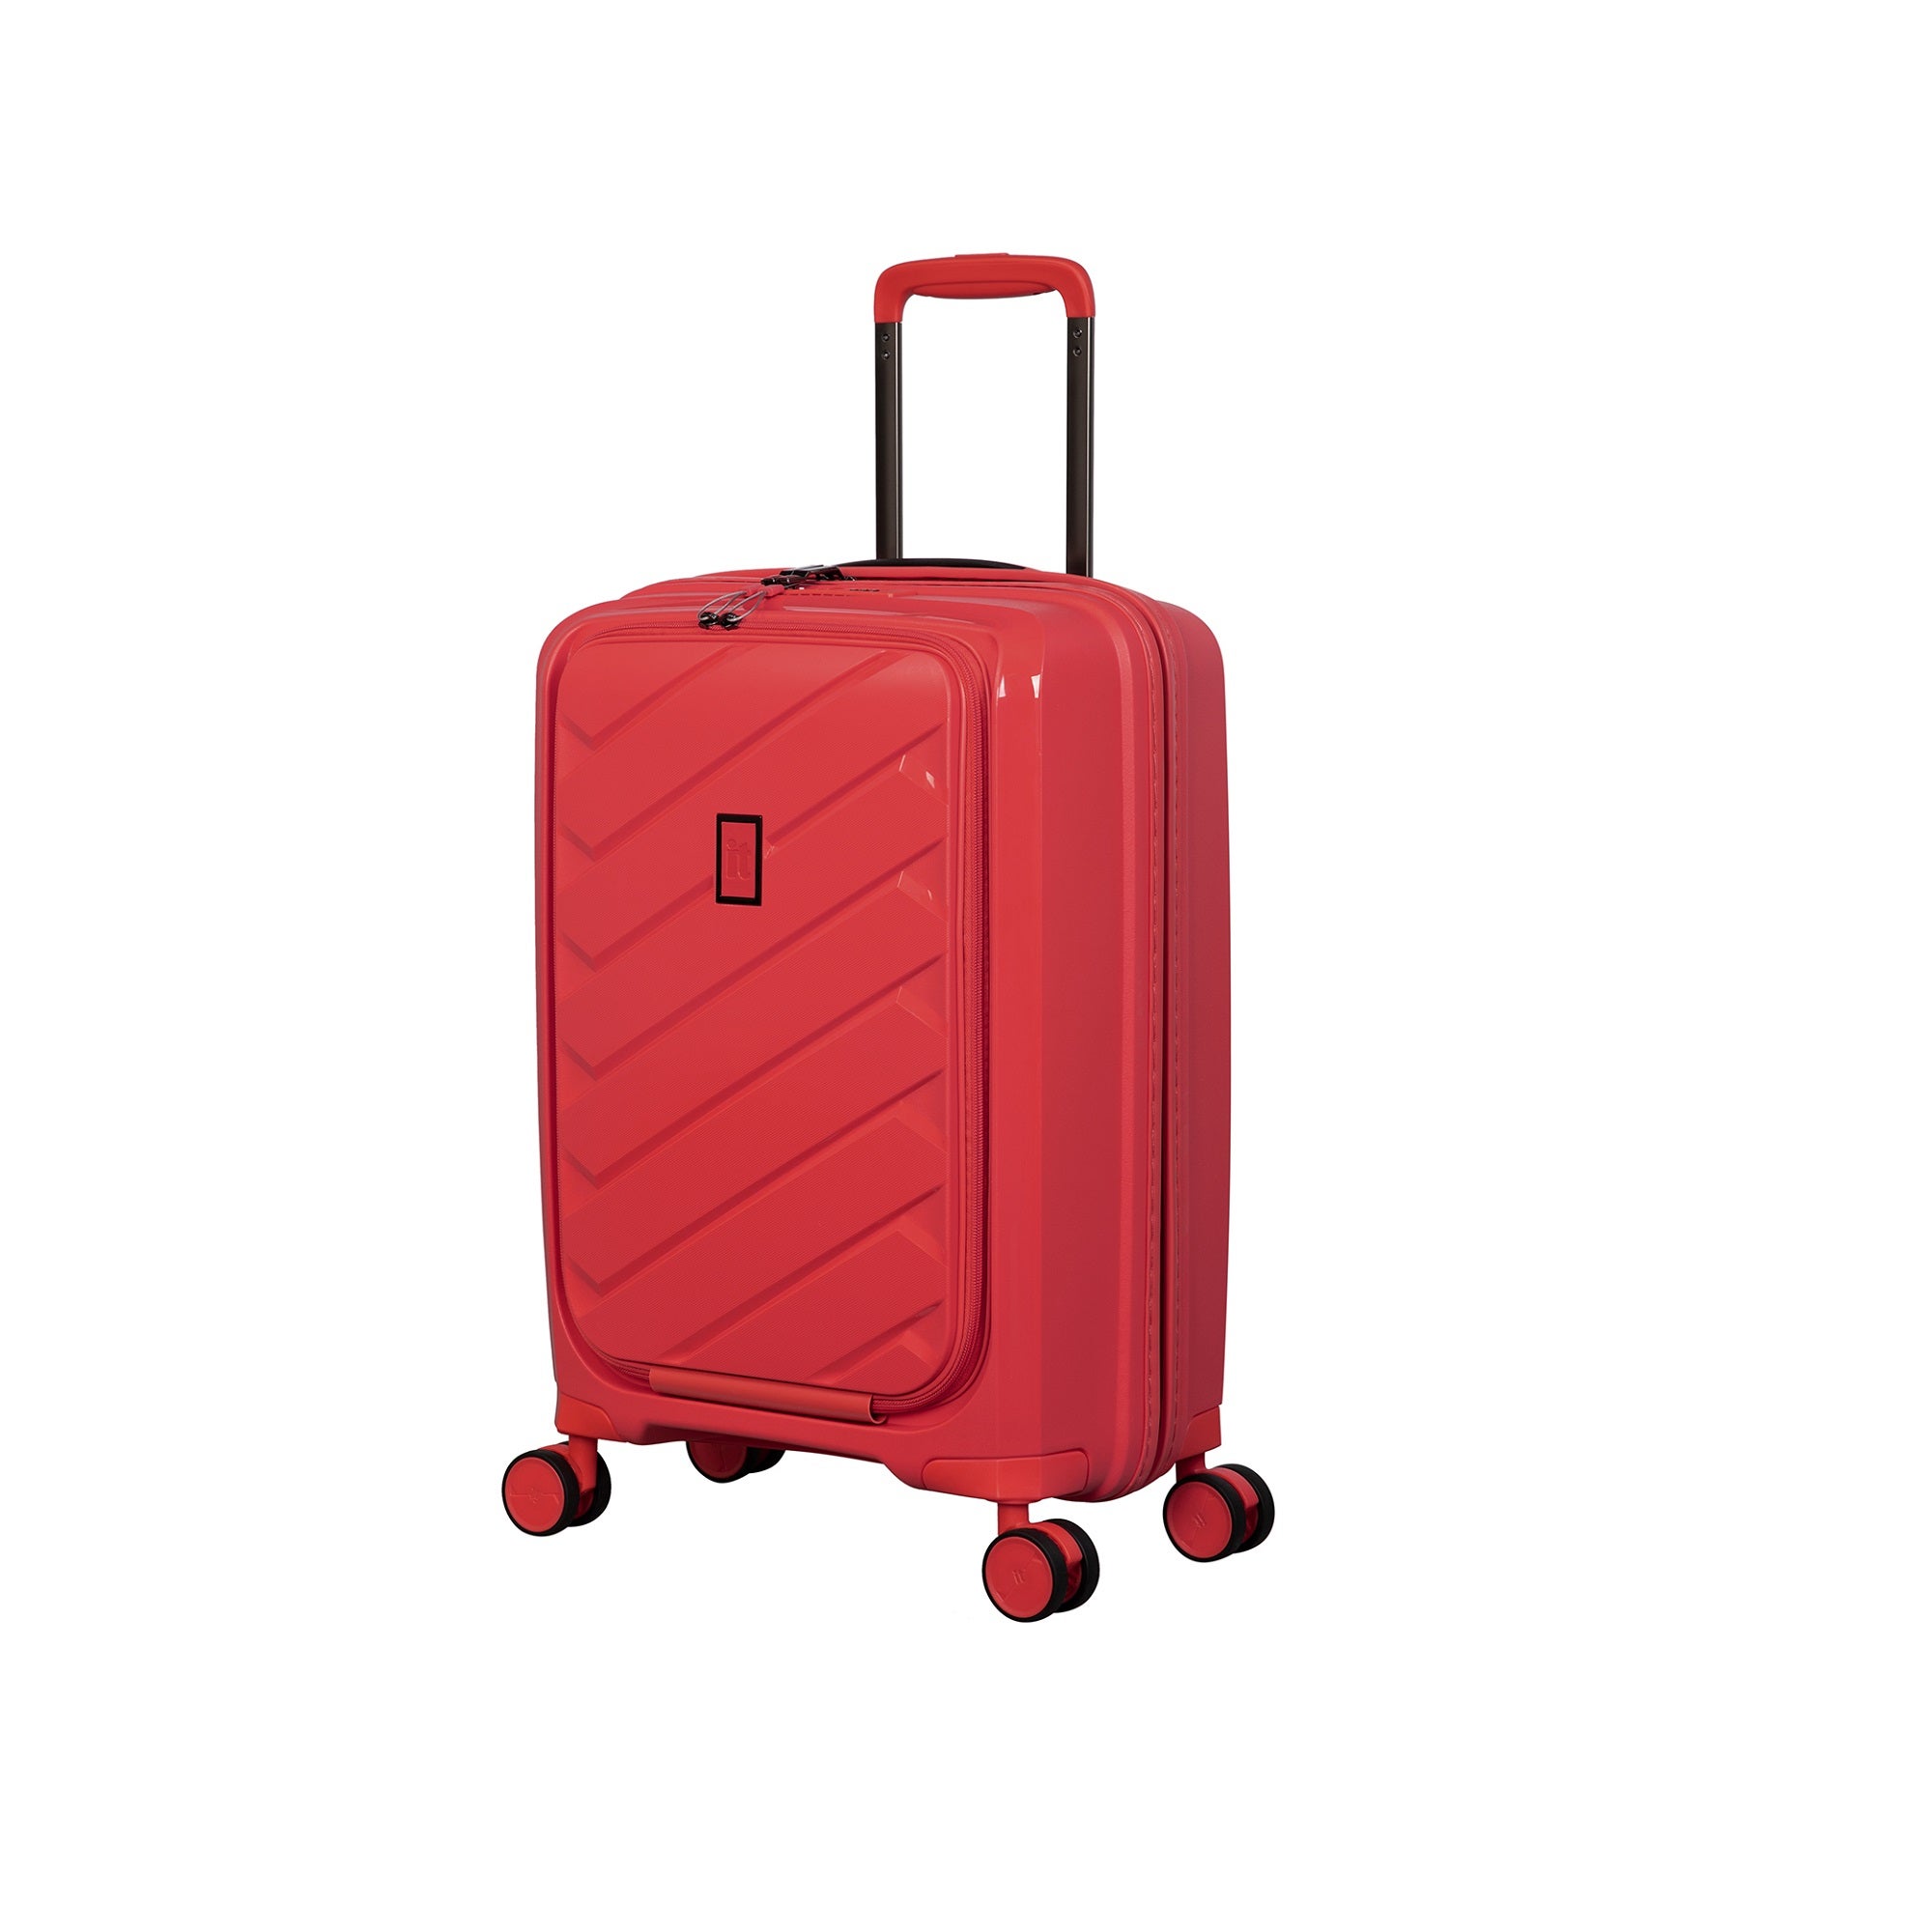 IT Luggage & Suitcases | Dunelm